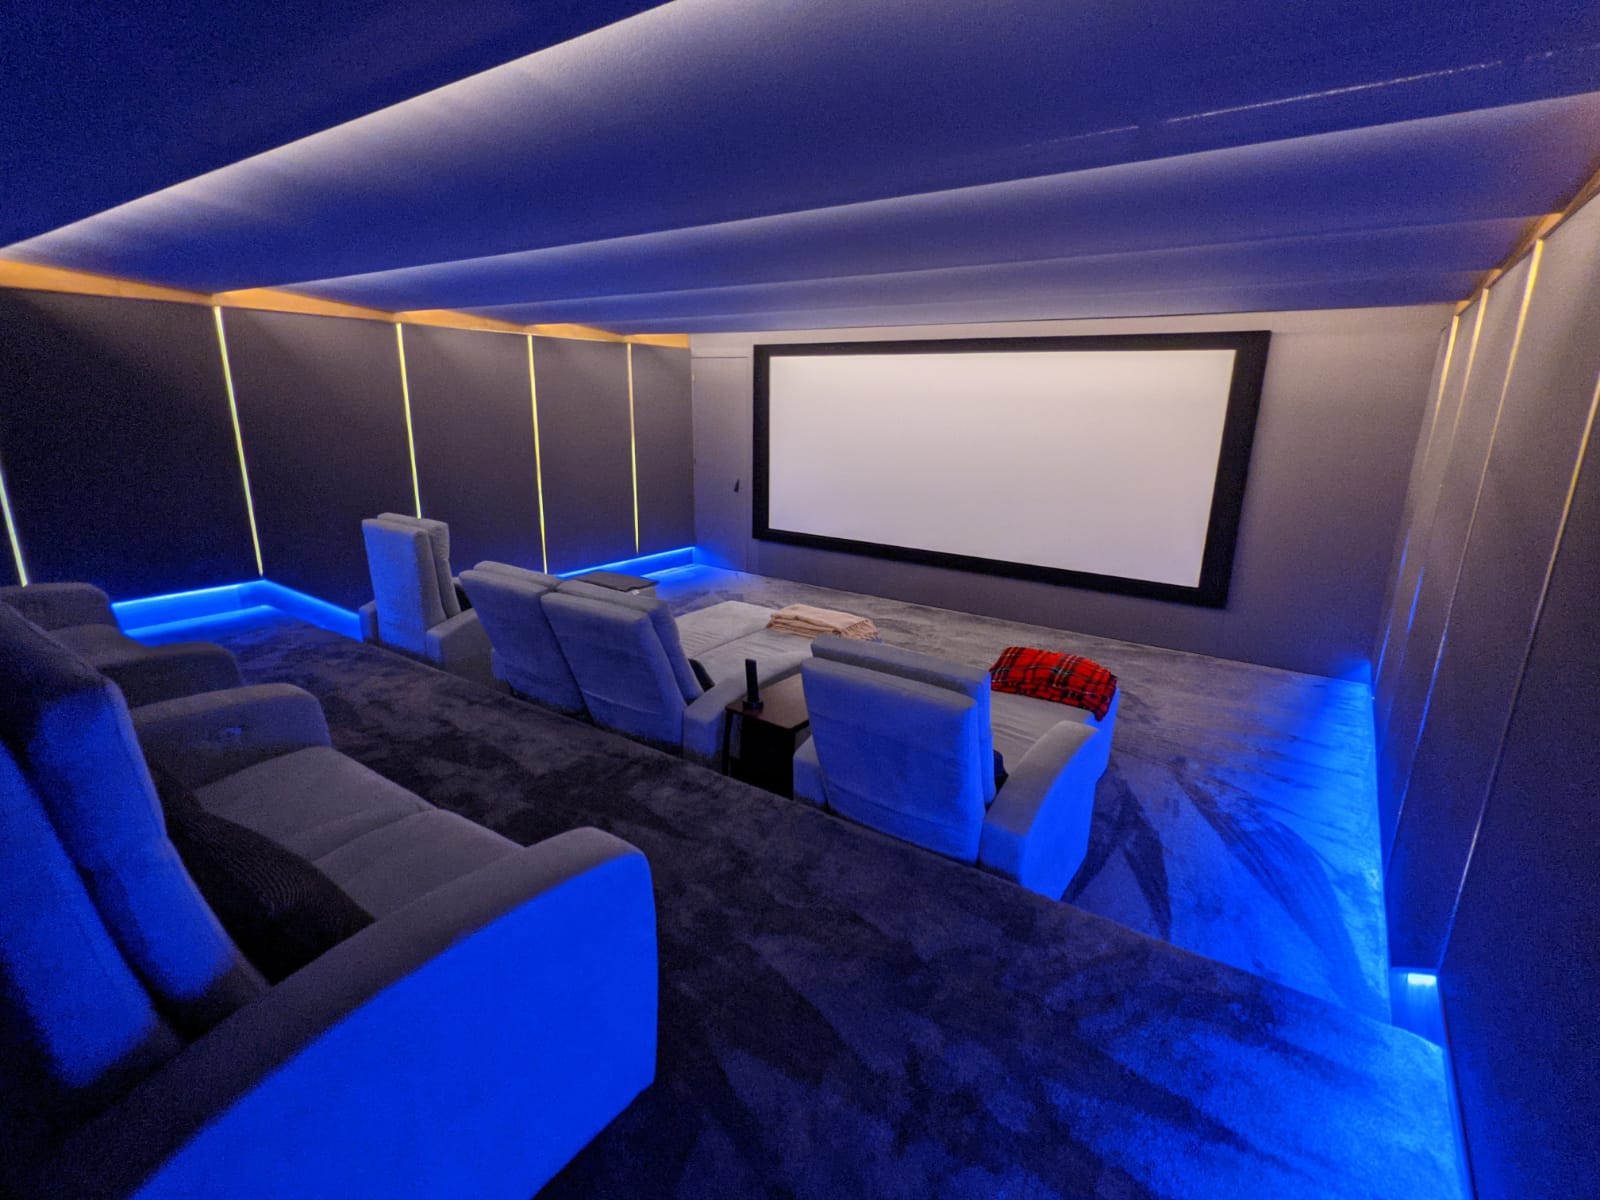 Luxury cinema with fabric walls